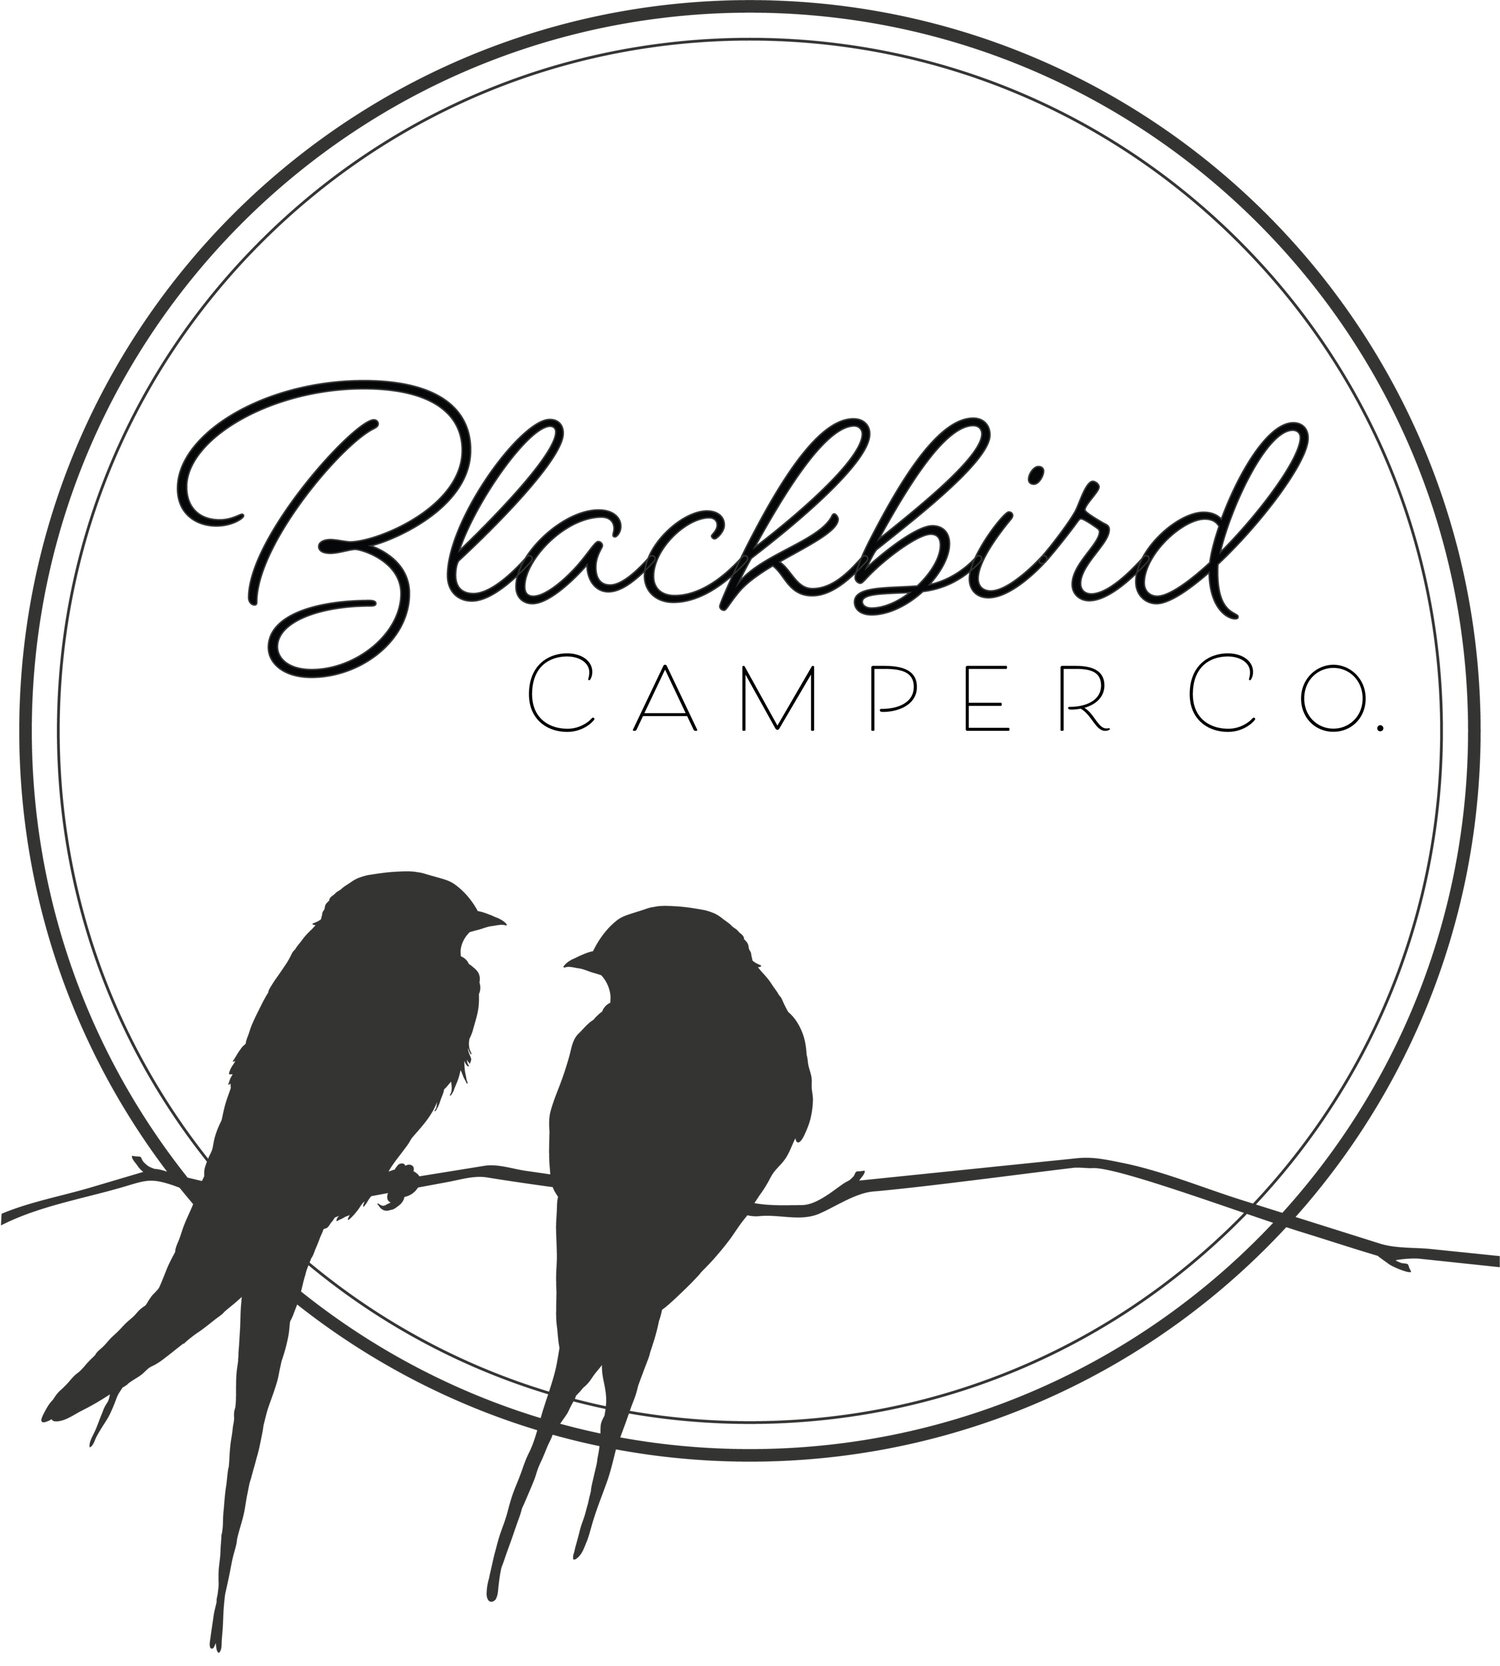 Blackbird Camper Co.